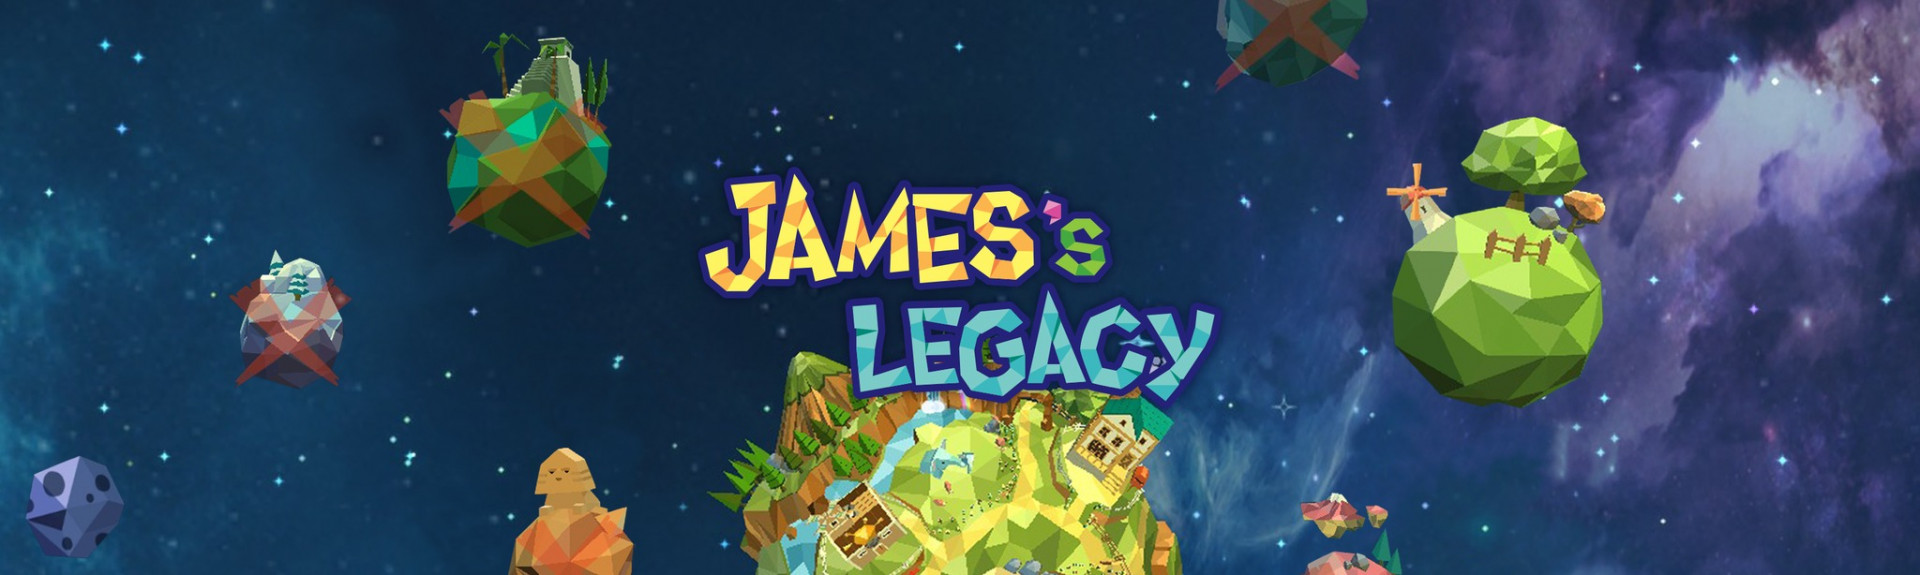 James's Legacy